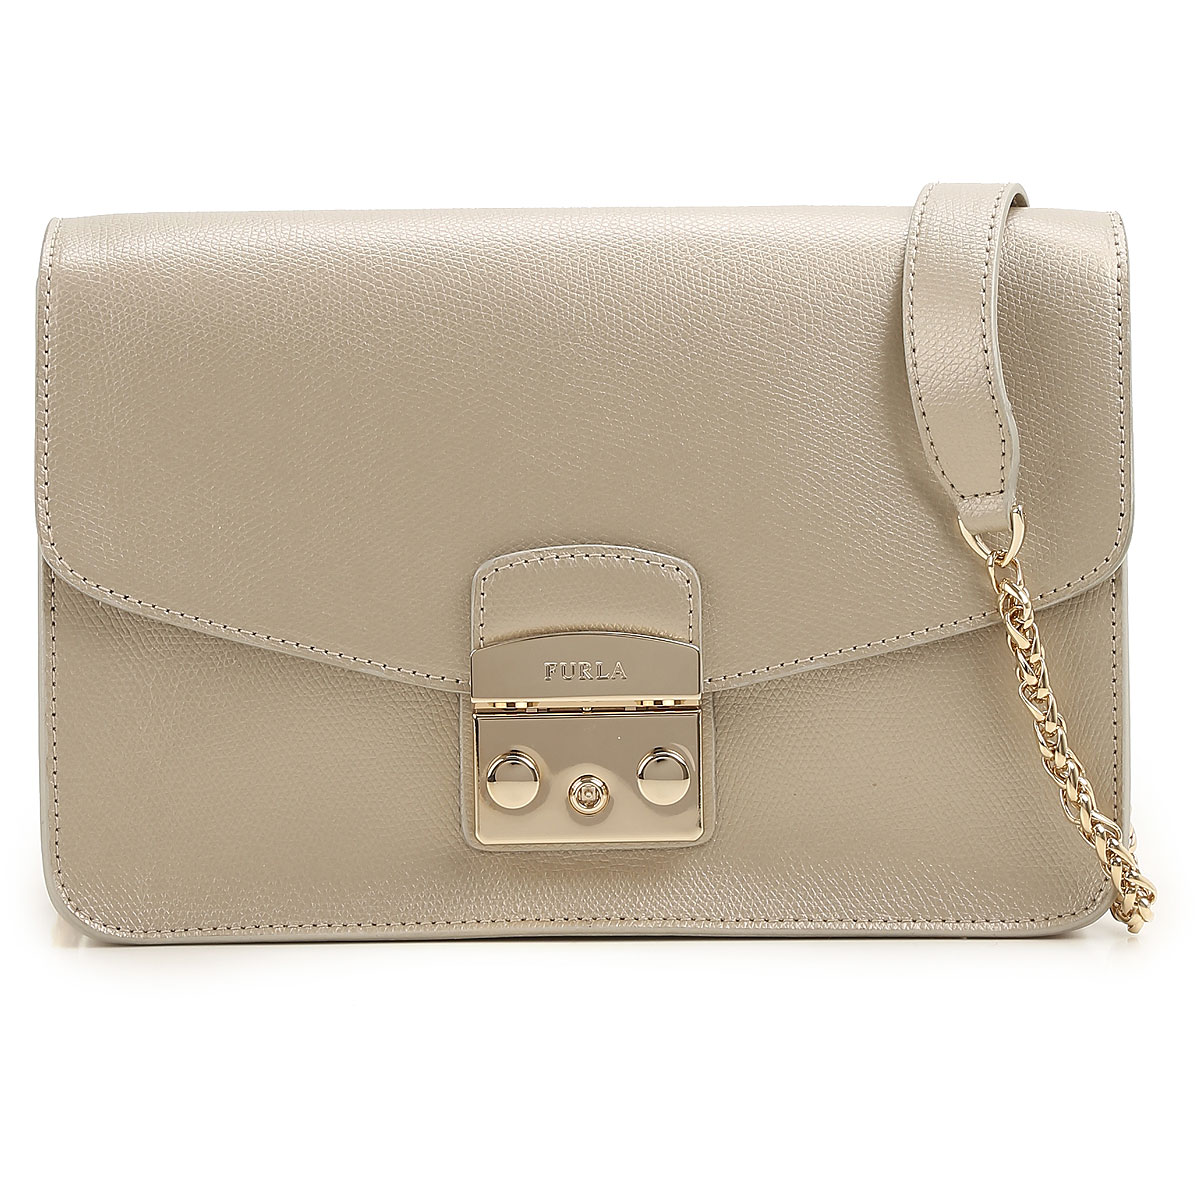 Handbags Furla, Style code: 884983-bhv7-amt